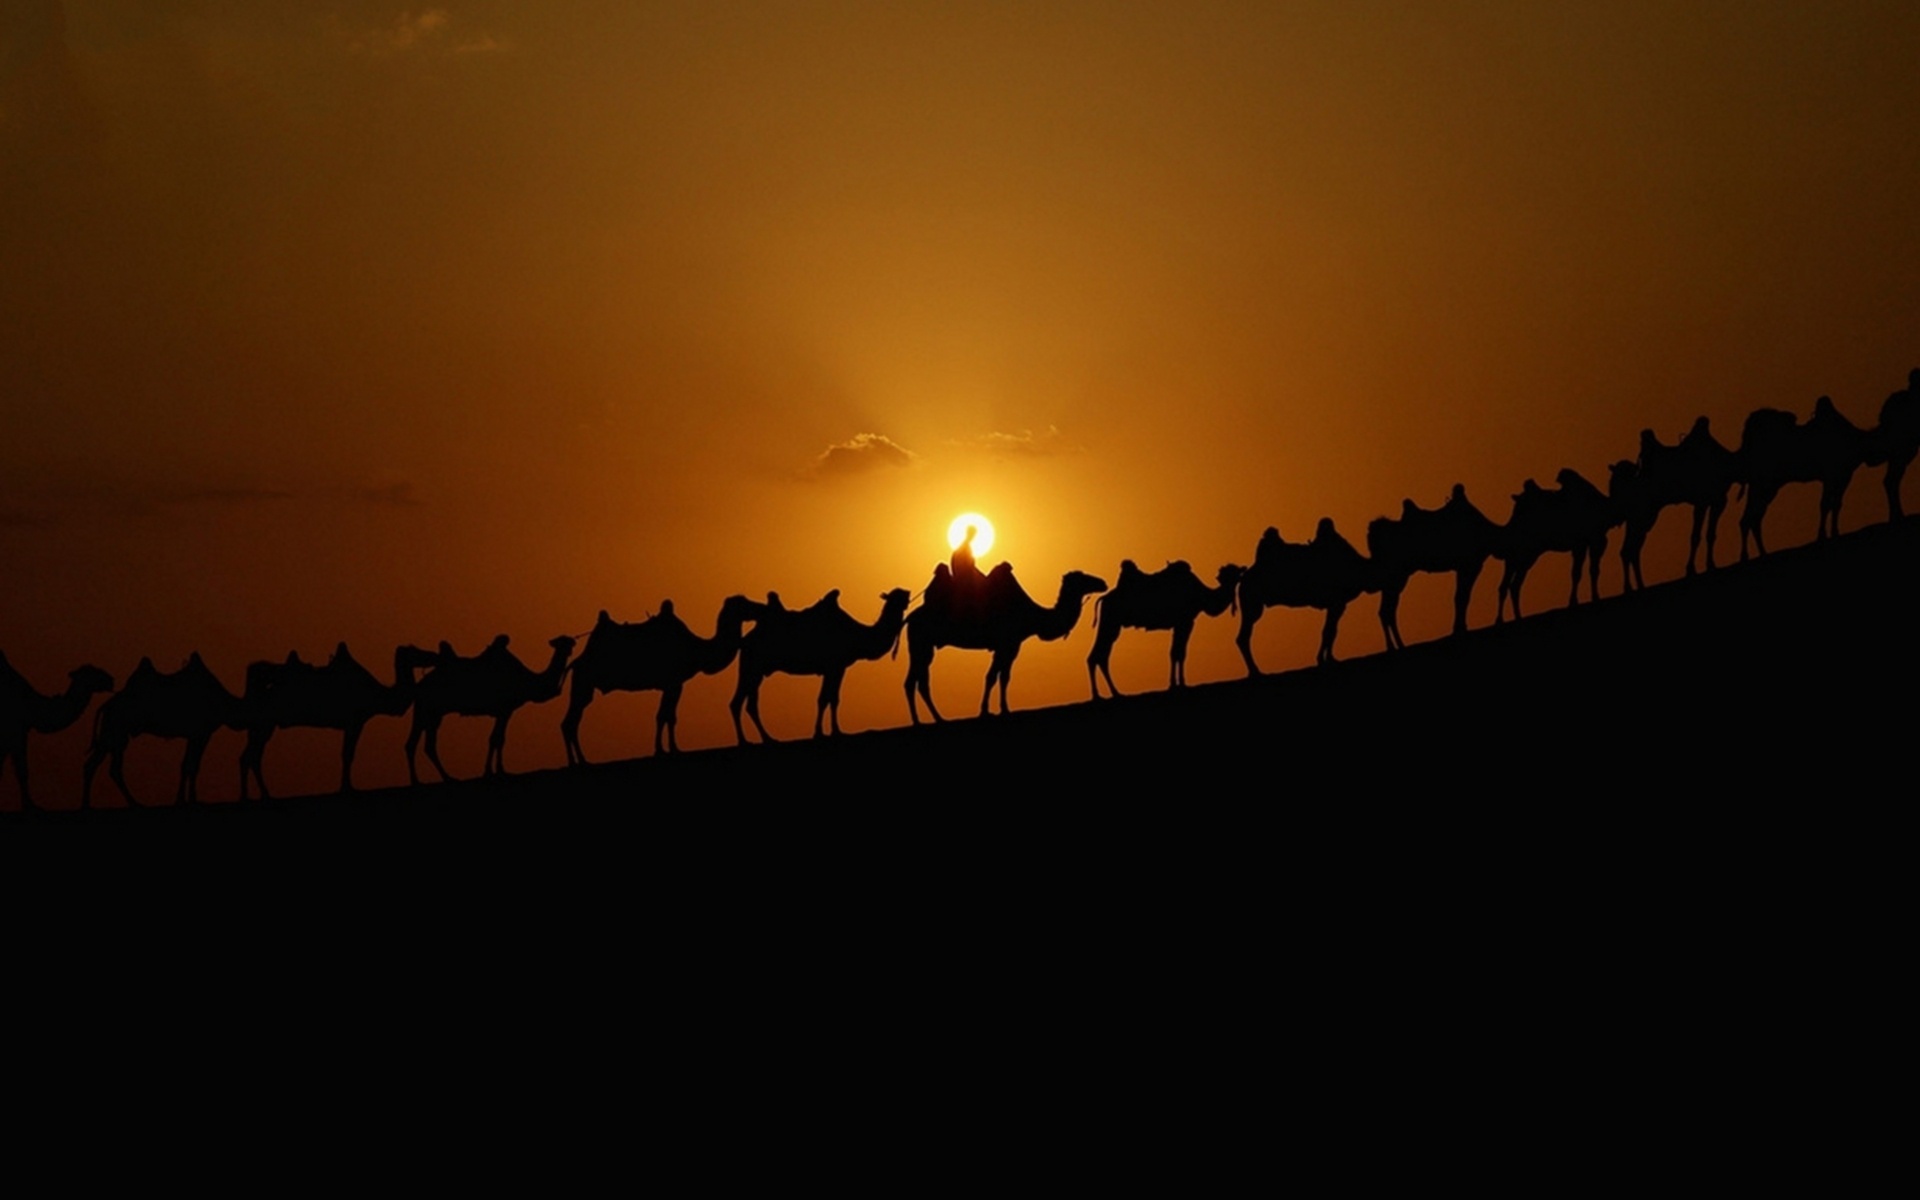 Караван картинка. Картинка Караван верблюдов в пустыне. Верблюд в пустыне.